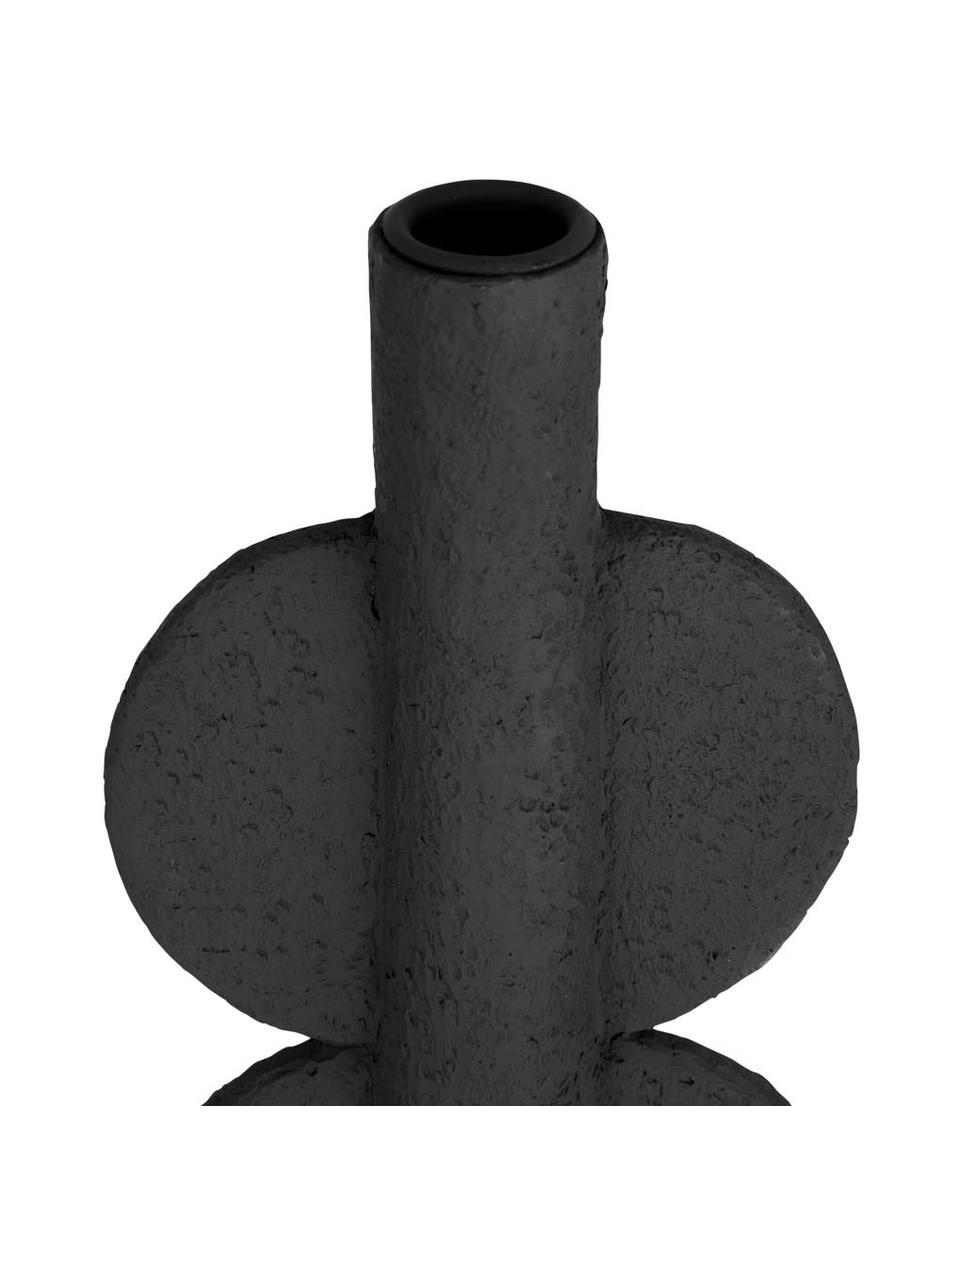 Bougeoir noir Double, Polyrésine, Noir, larg. 11 x haut. 22 cm